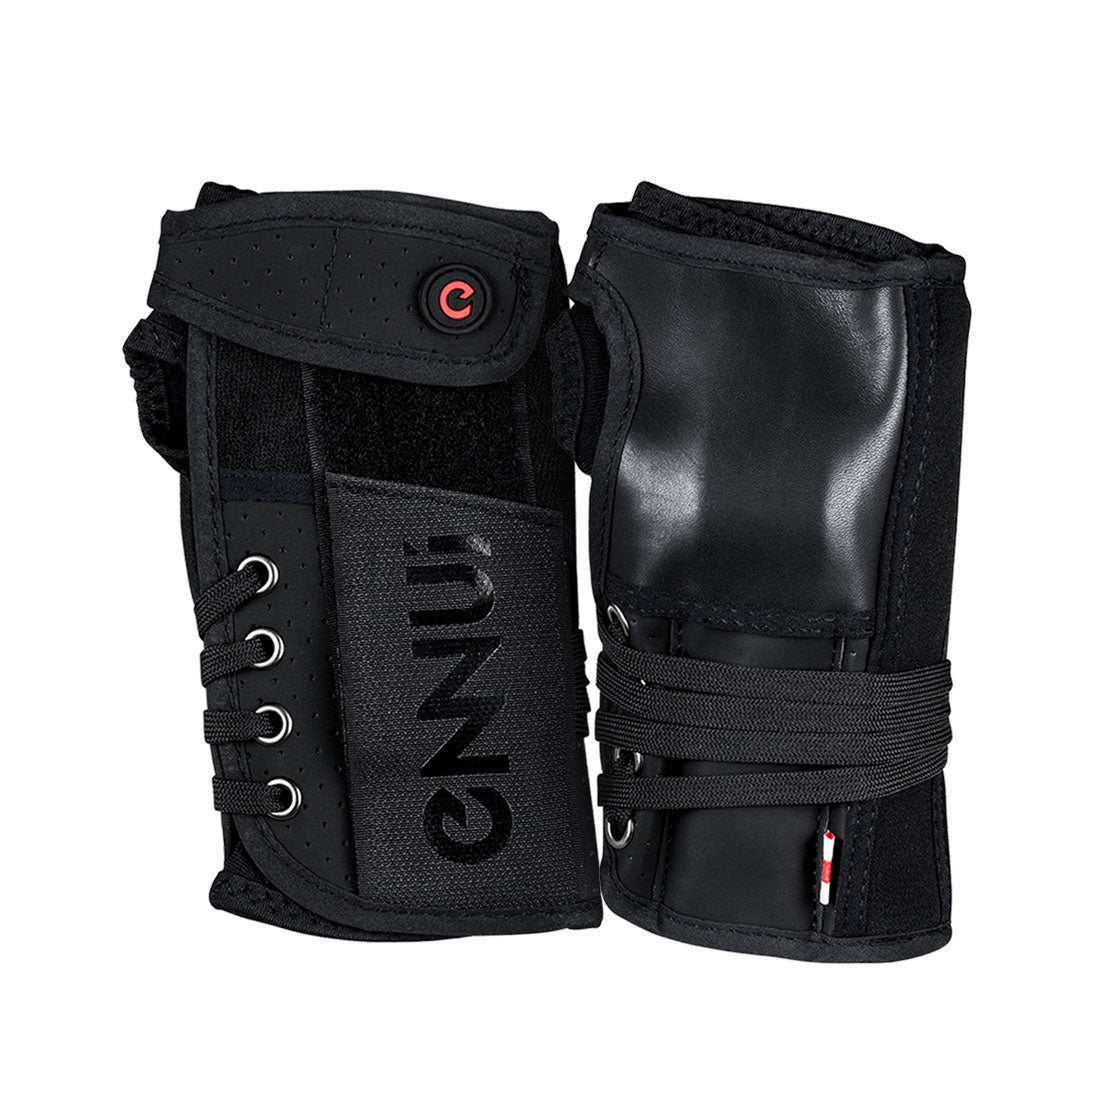 Ennui City III Wrist Brace Protective Gear